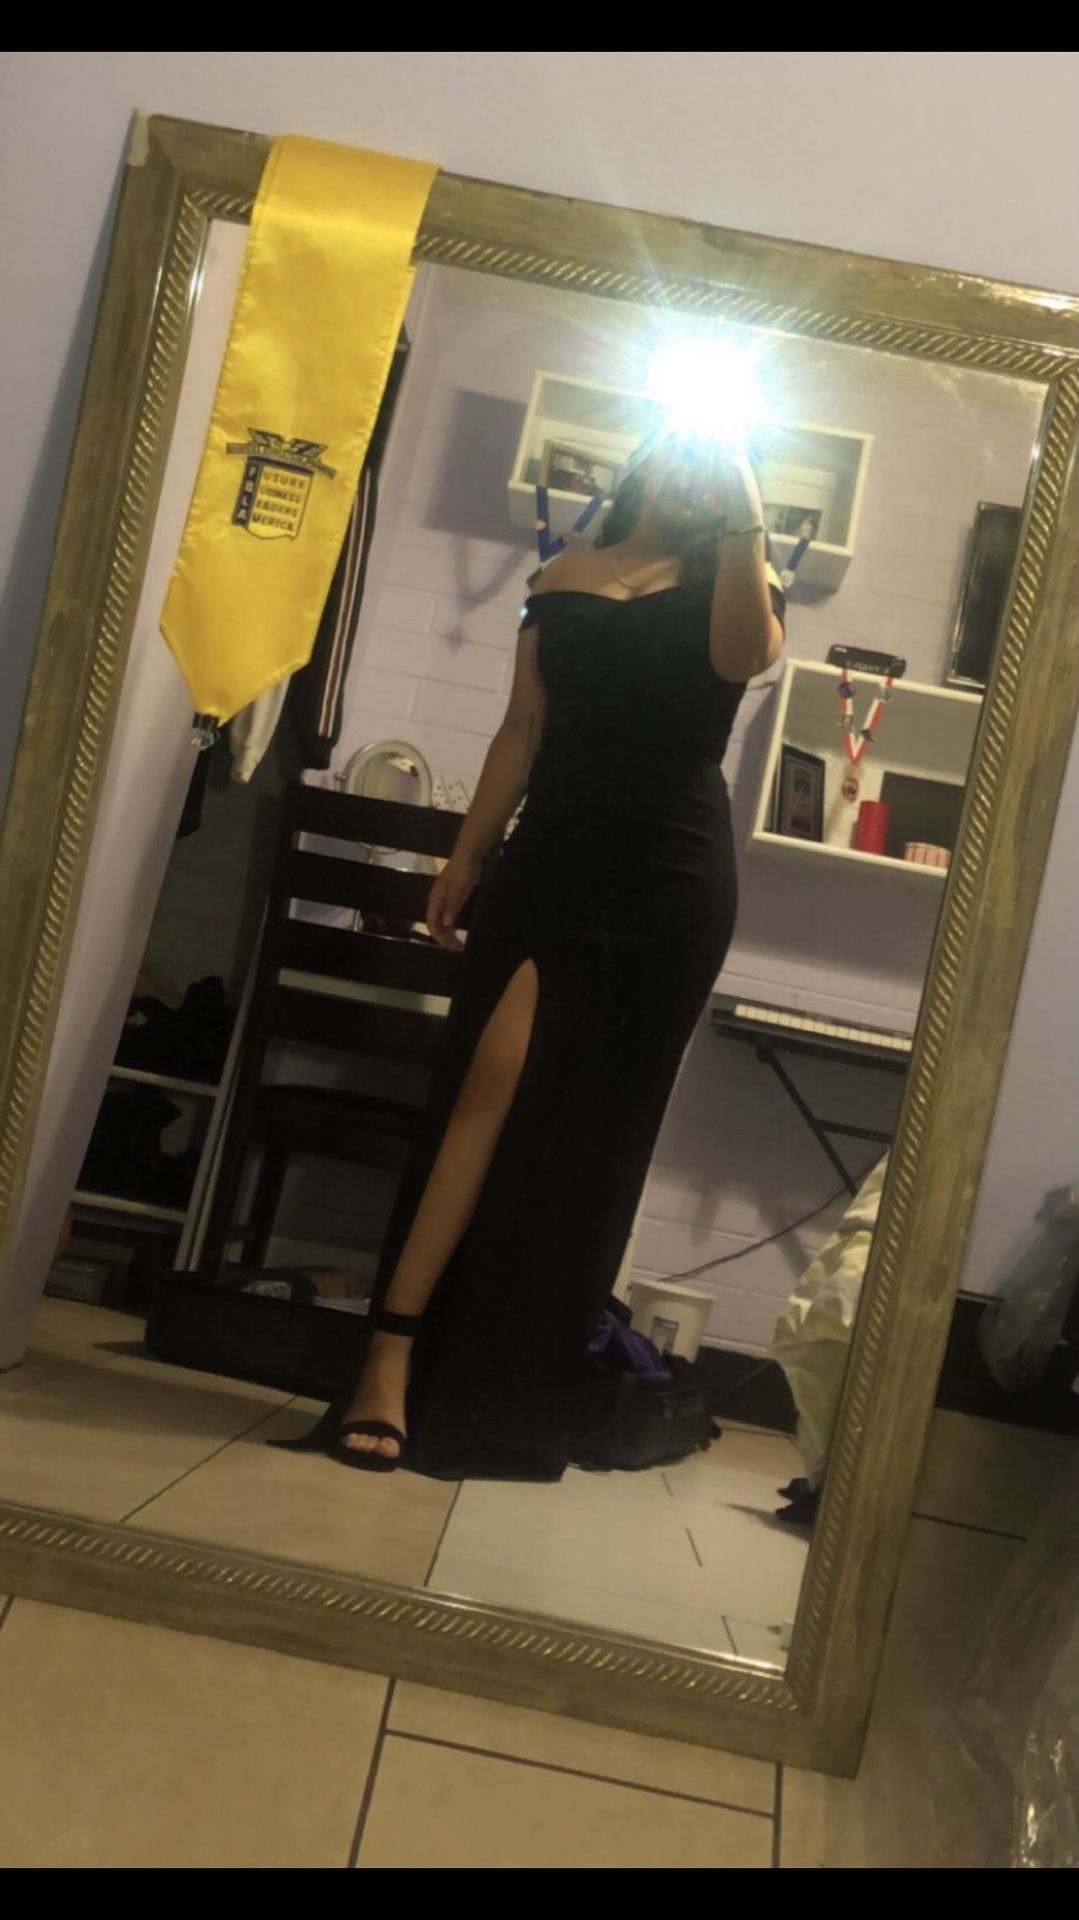 Elegant Black Dress